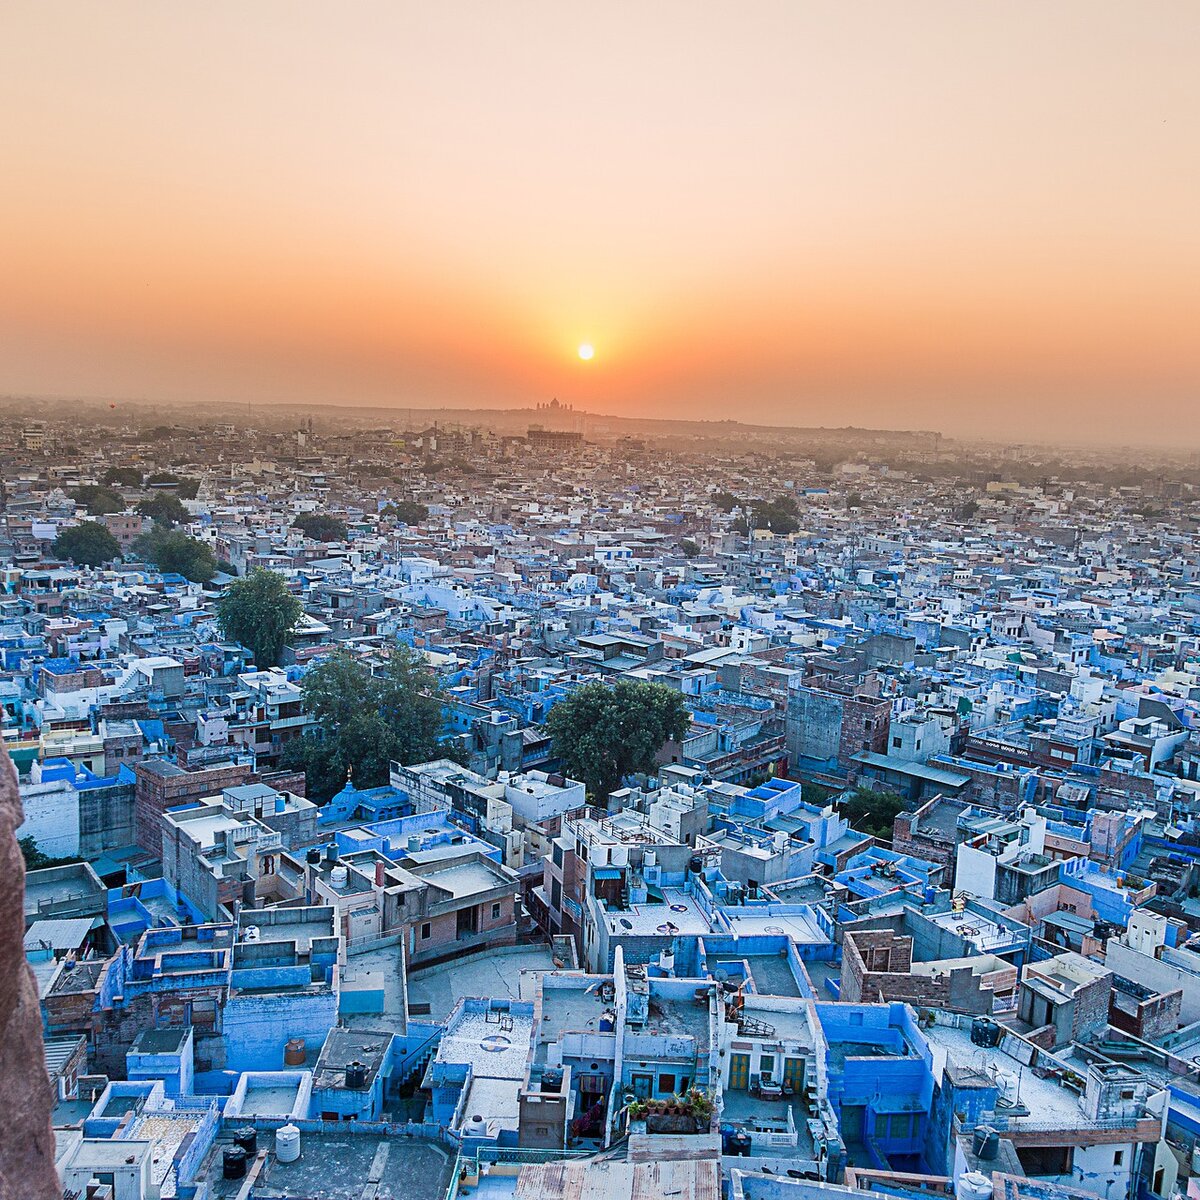 View across the Blue City of Jodhpur